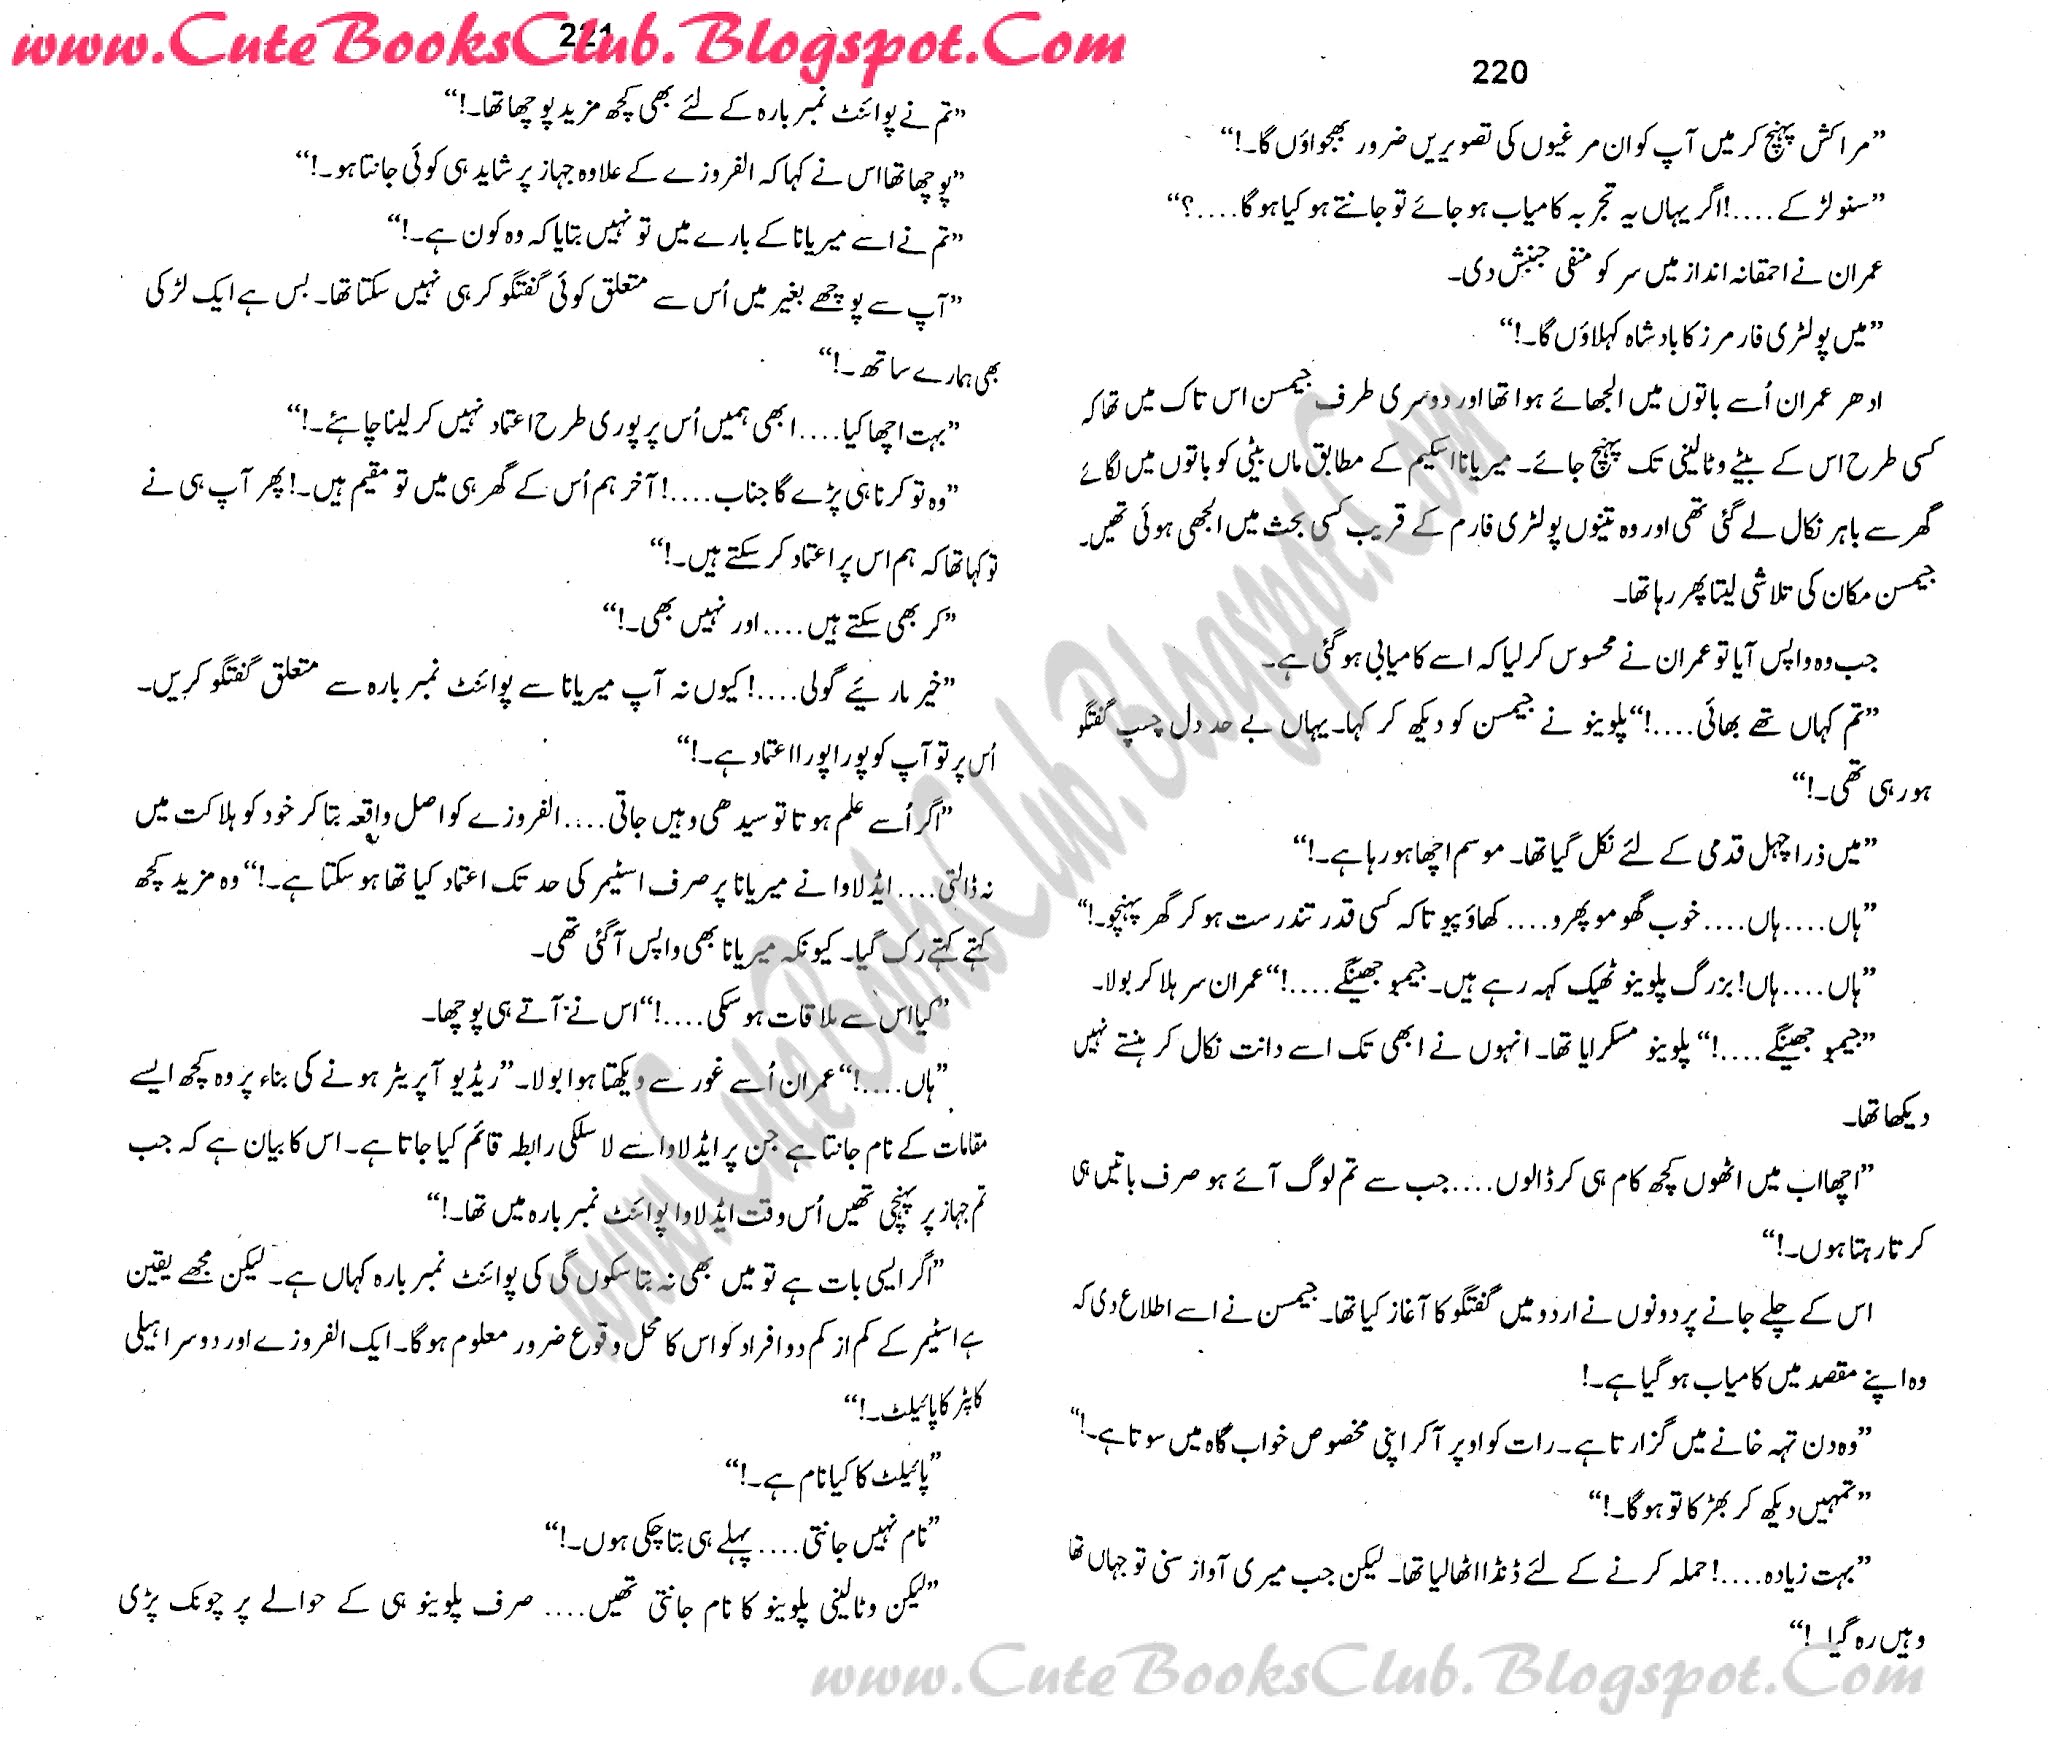 077- Point Number 12, Imran Series By Ibne Safi (Urdu Novel)